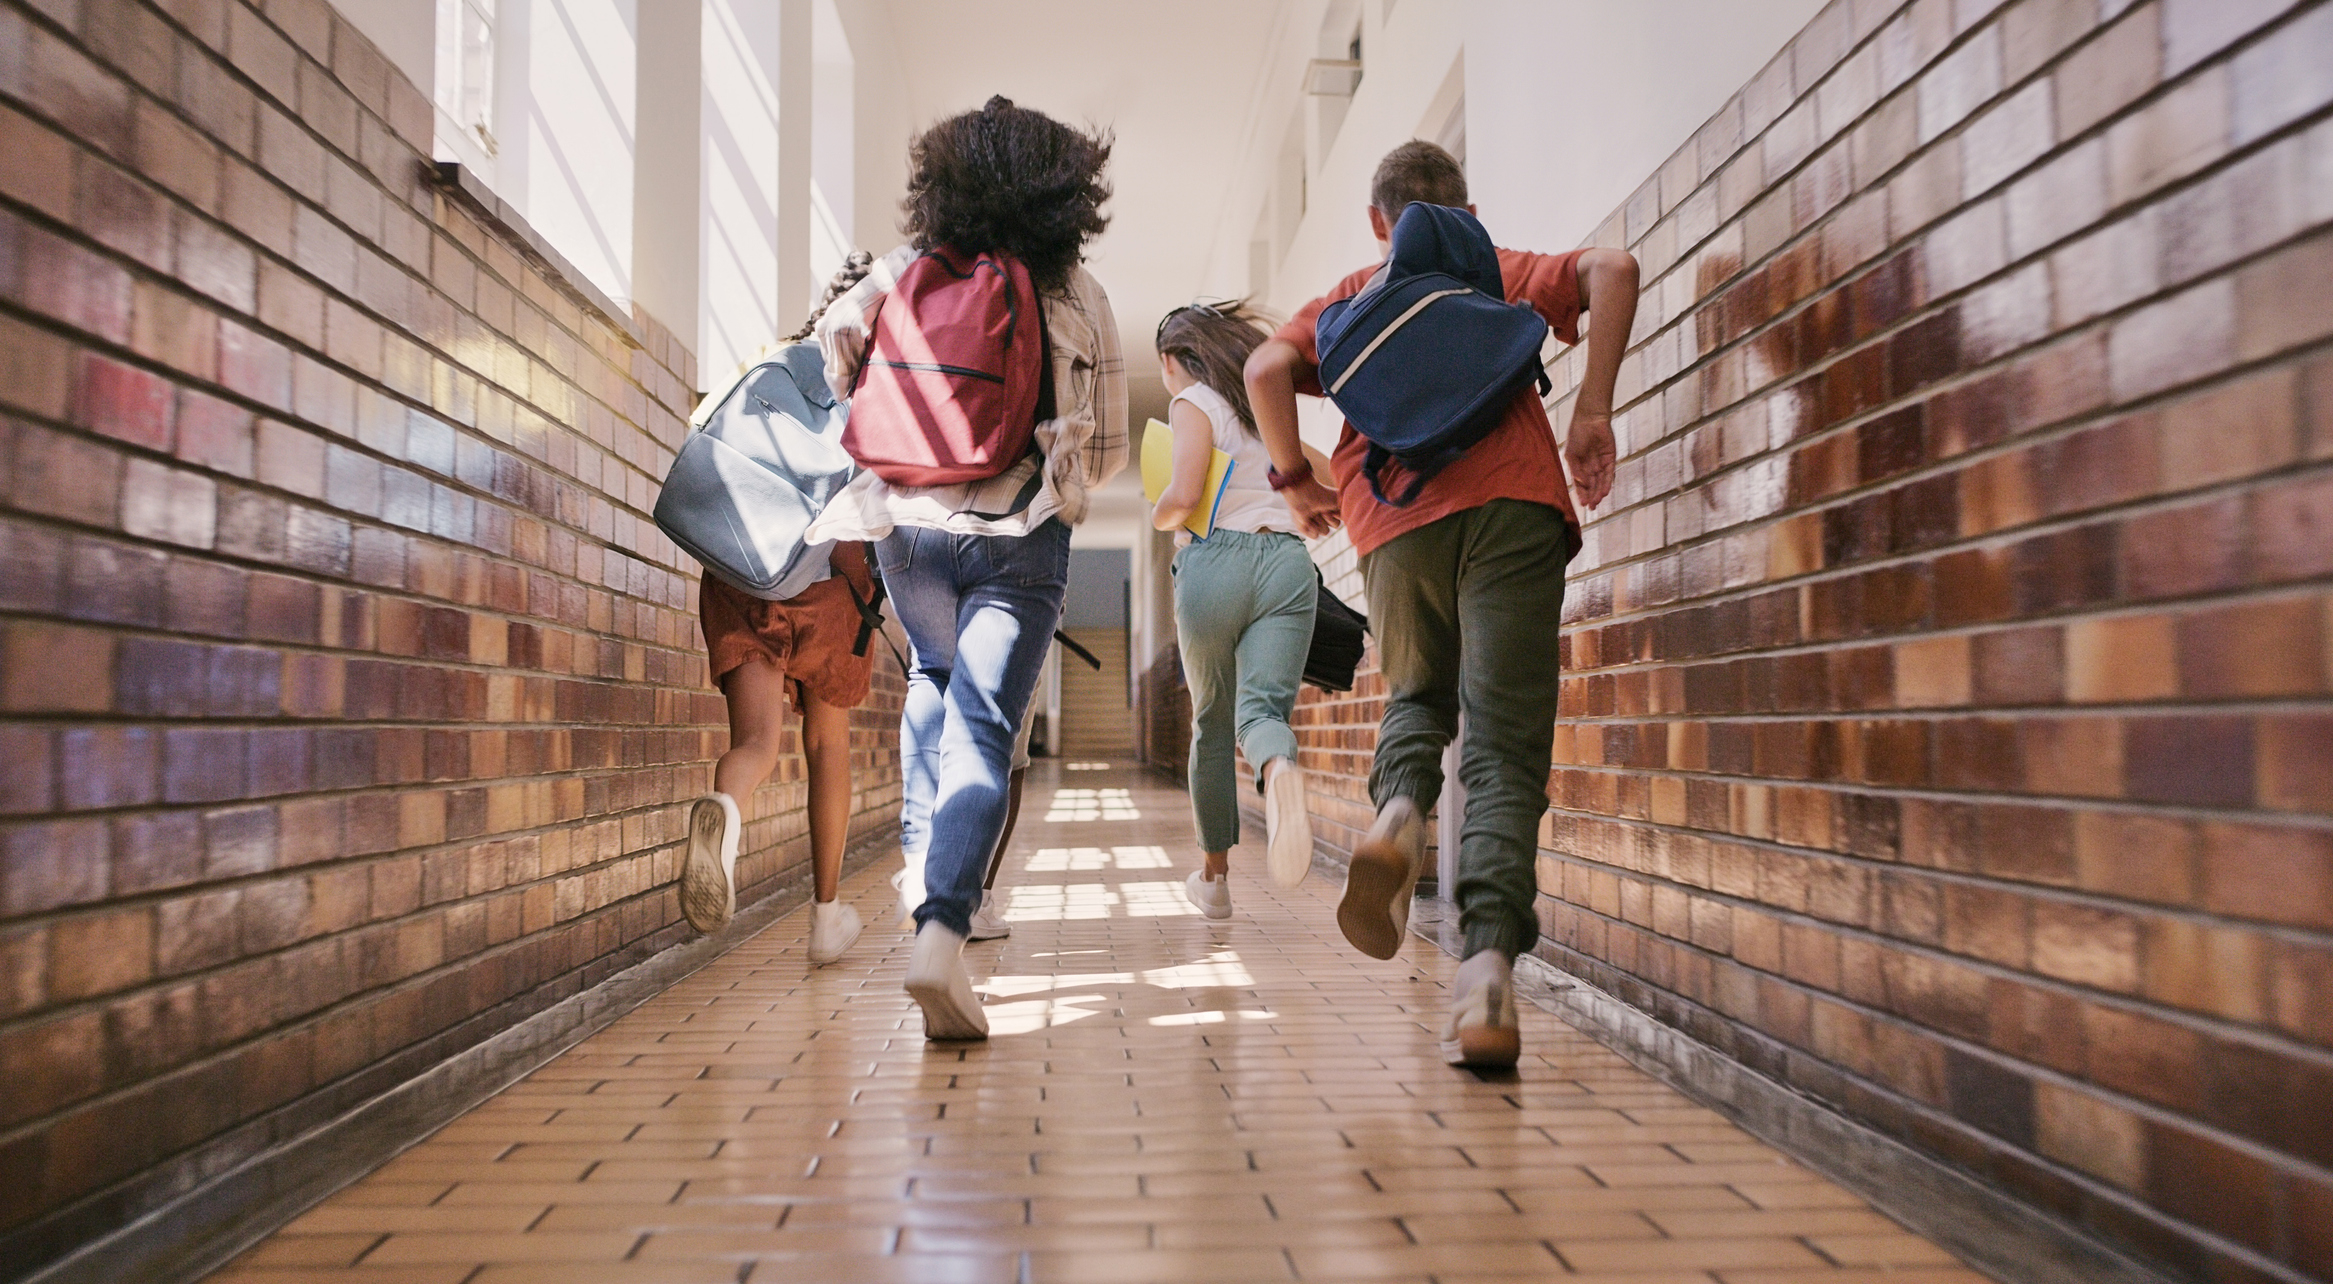 Children with backpacks running through a school hallway